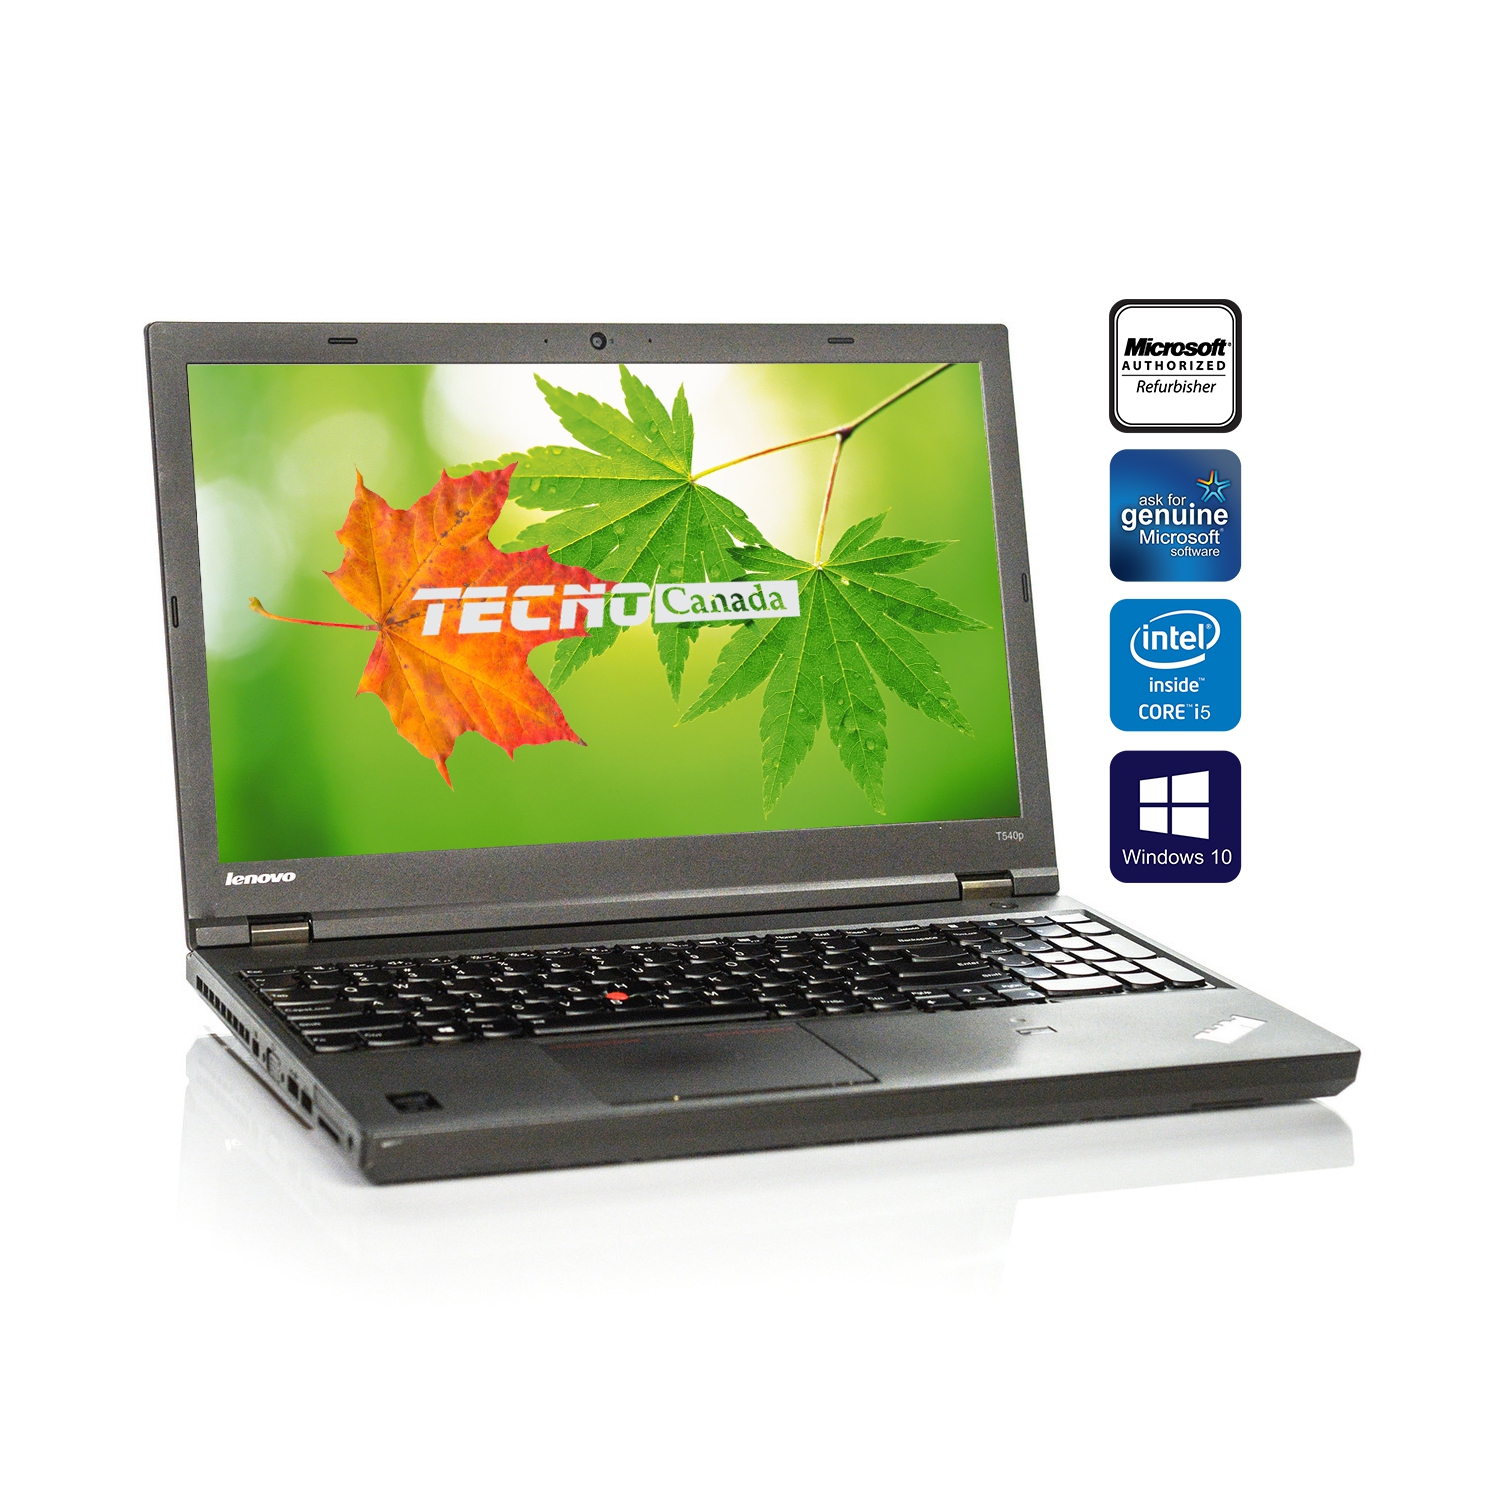 Refurbished (Excellent) - Lenovo Thinkpad T540p Laptop 15.6" Core i5 4300M 16GB 256GB SSD DVD Windows10 Home WiFi Bluetooth